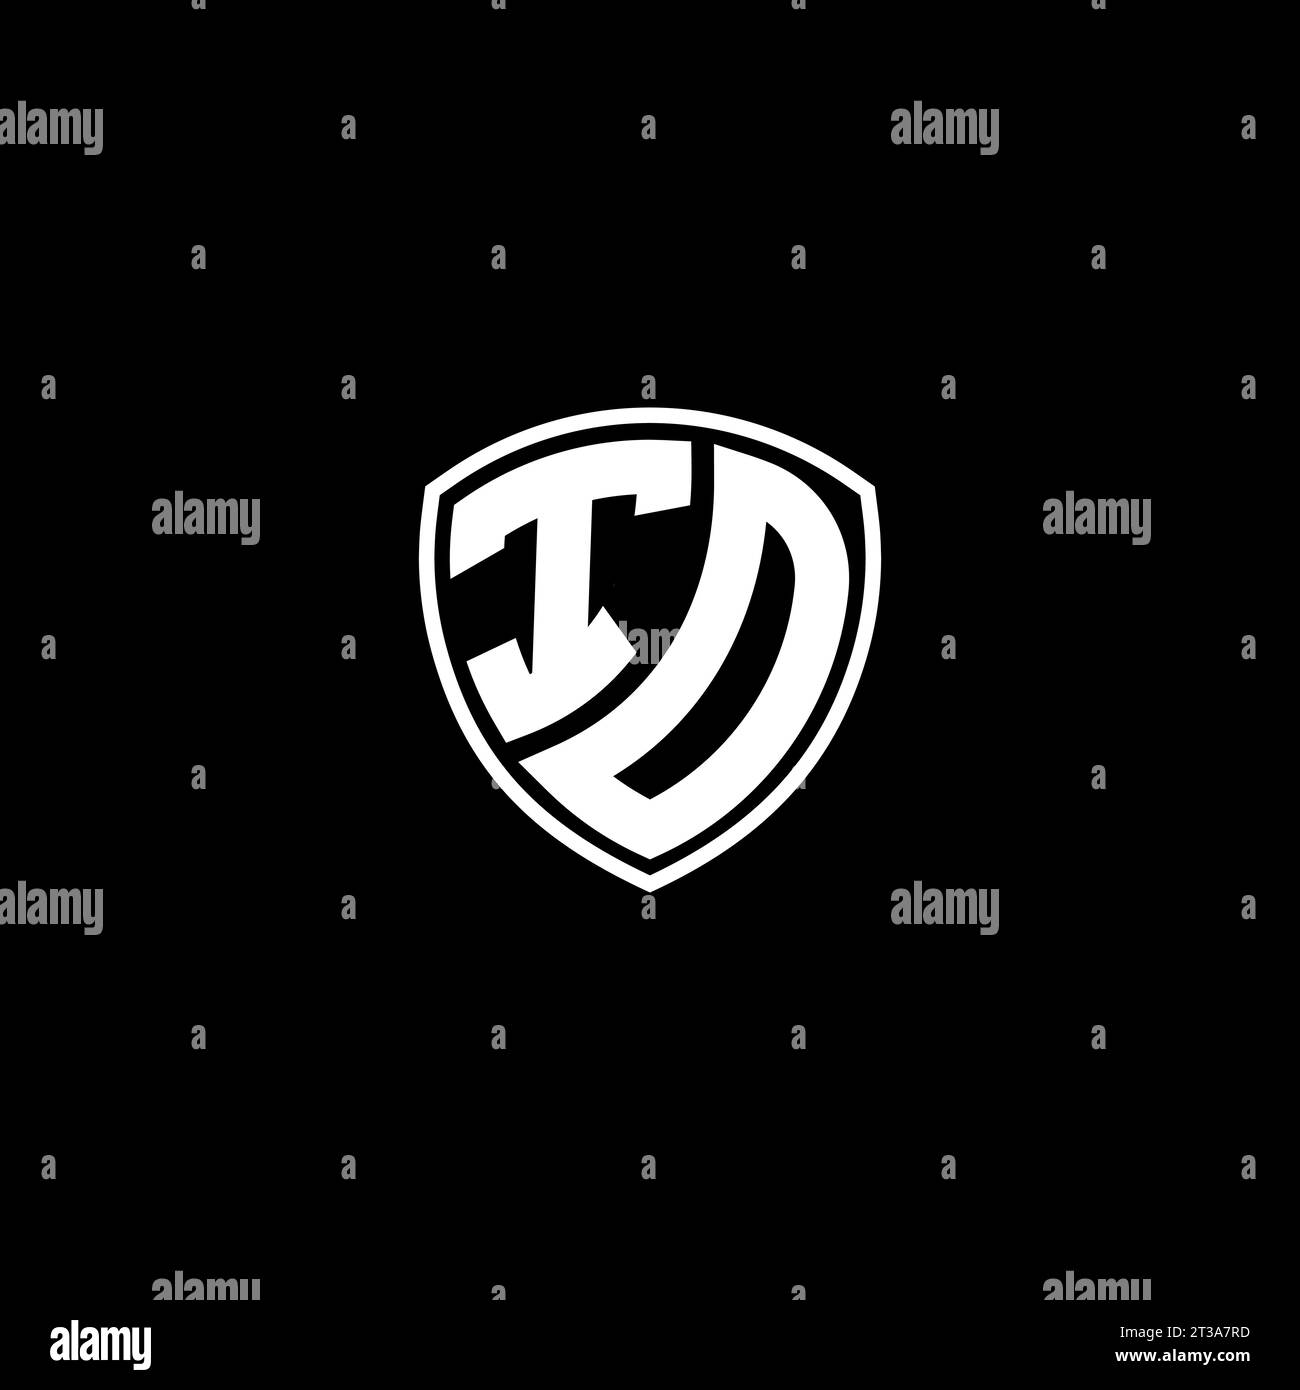 ID logo monogram emblem style with shield shape design template ideas Stock Vector